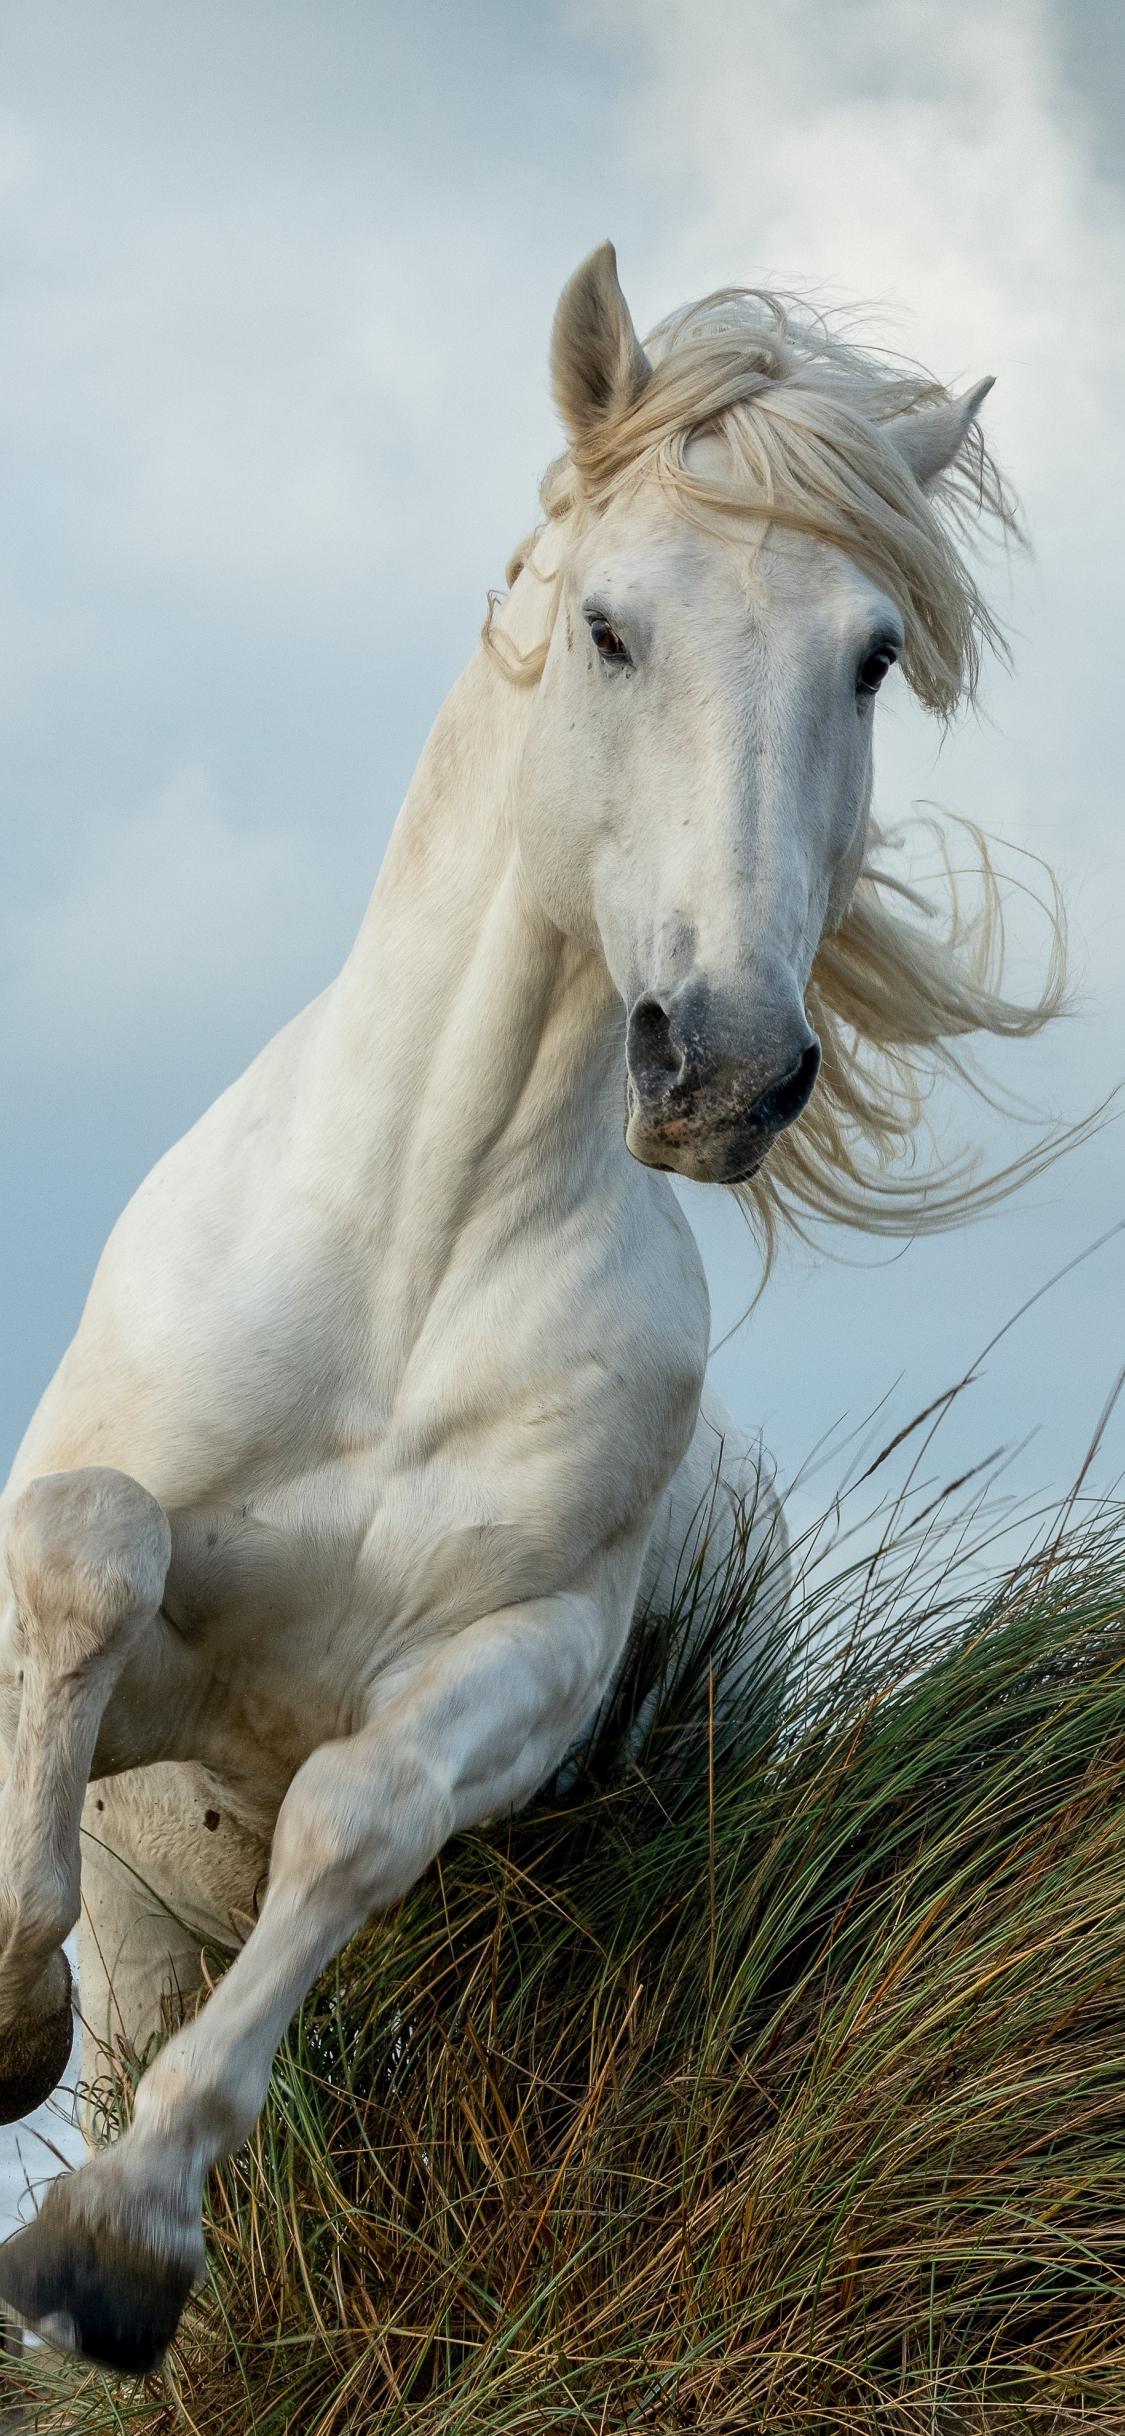 Download wallpaper 1125x2436 white horse, run, animal, iphone x, 1125x2436  hd background, 26277